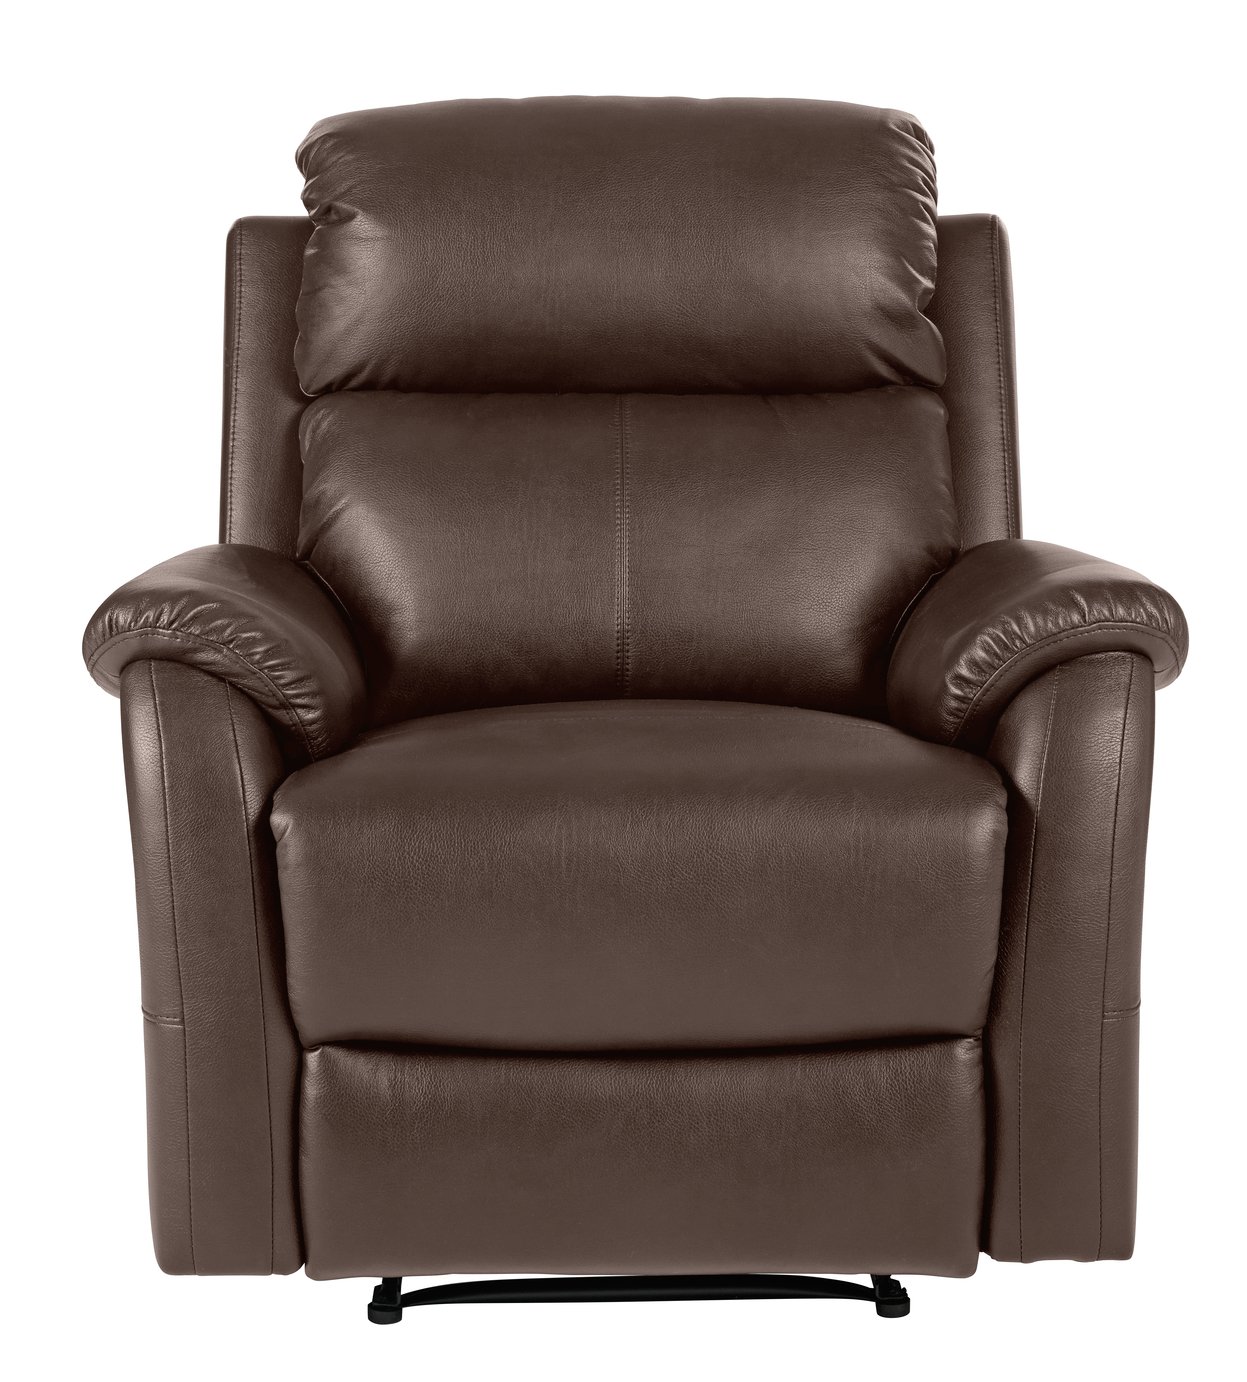 Argos Home Tyler Manual Recliner Chair Reviews